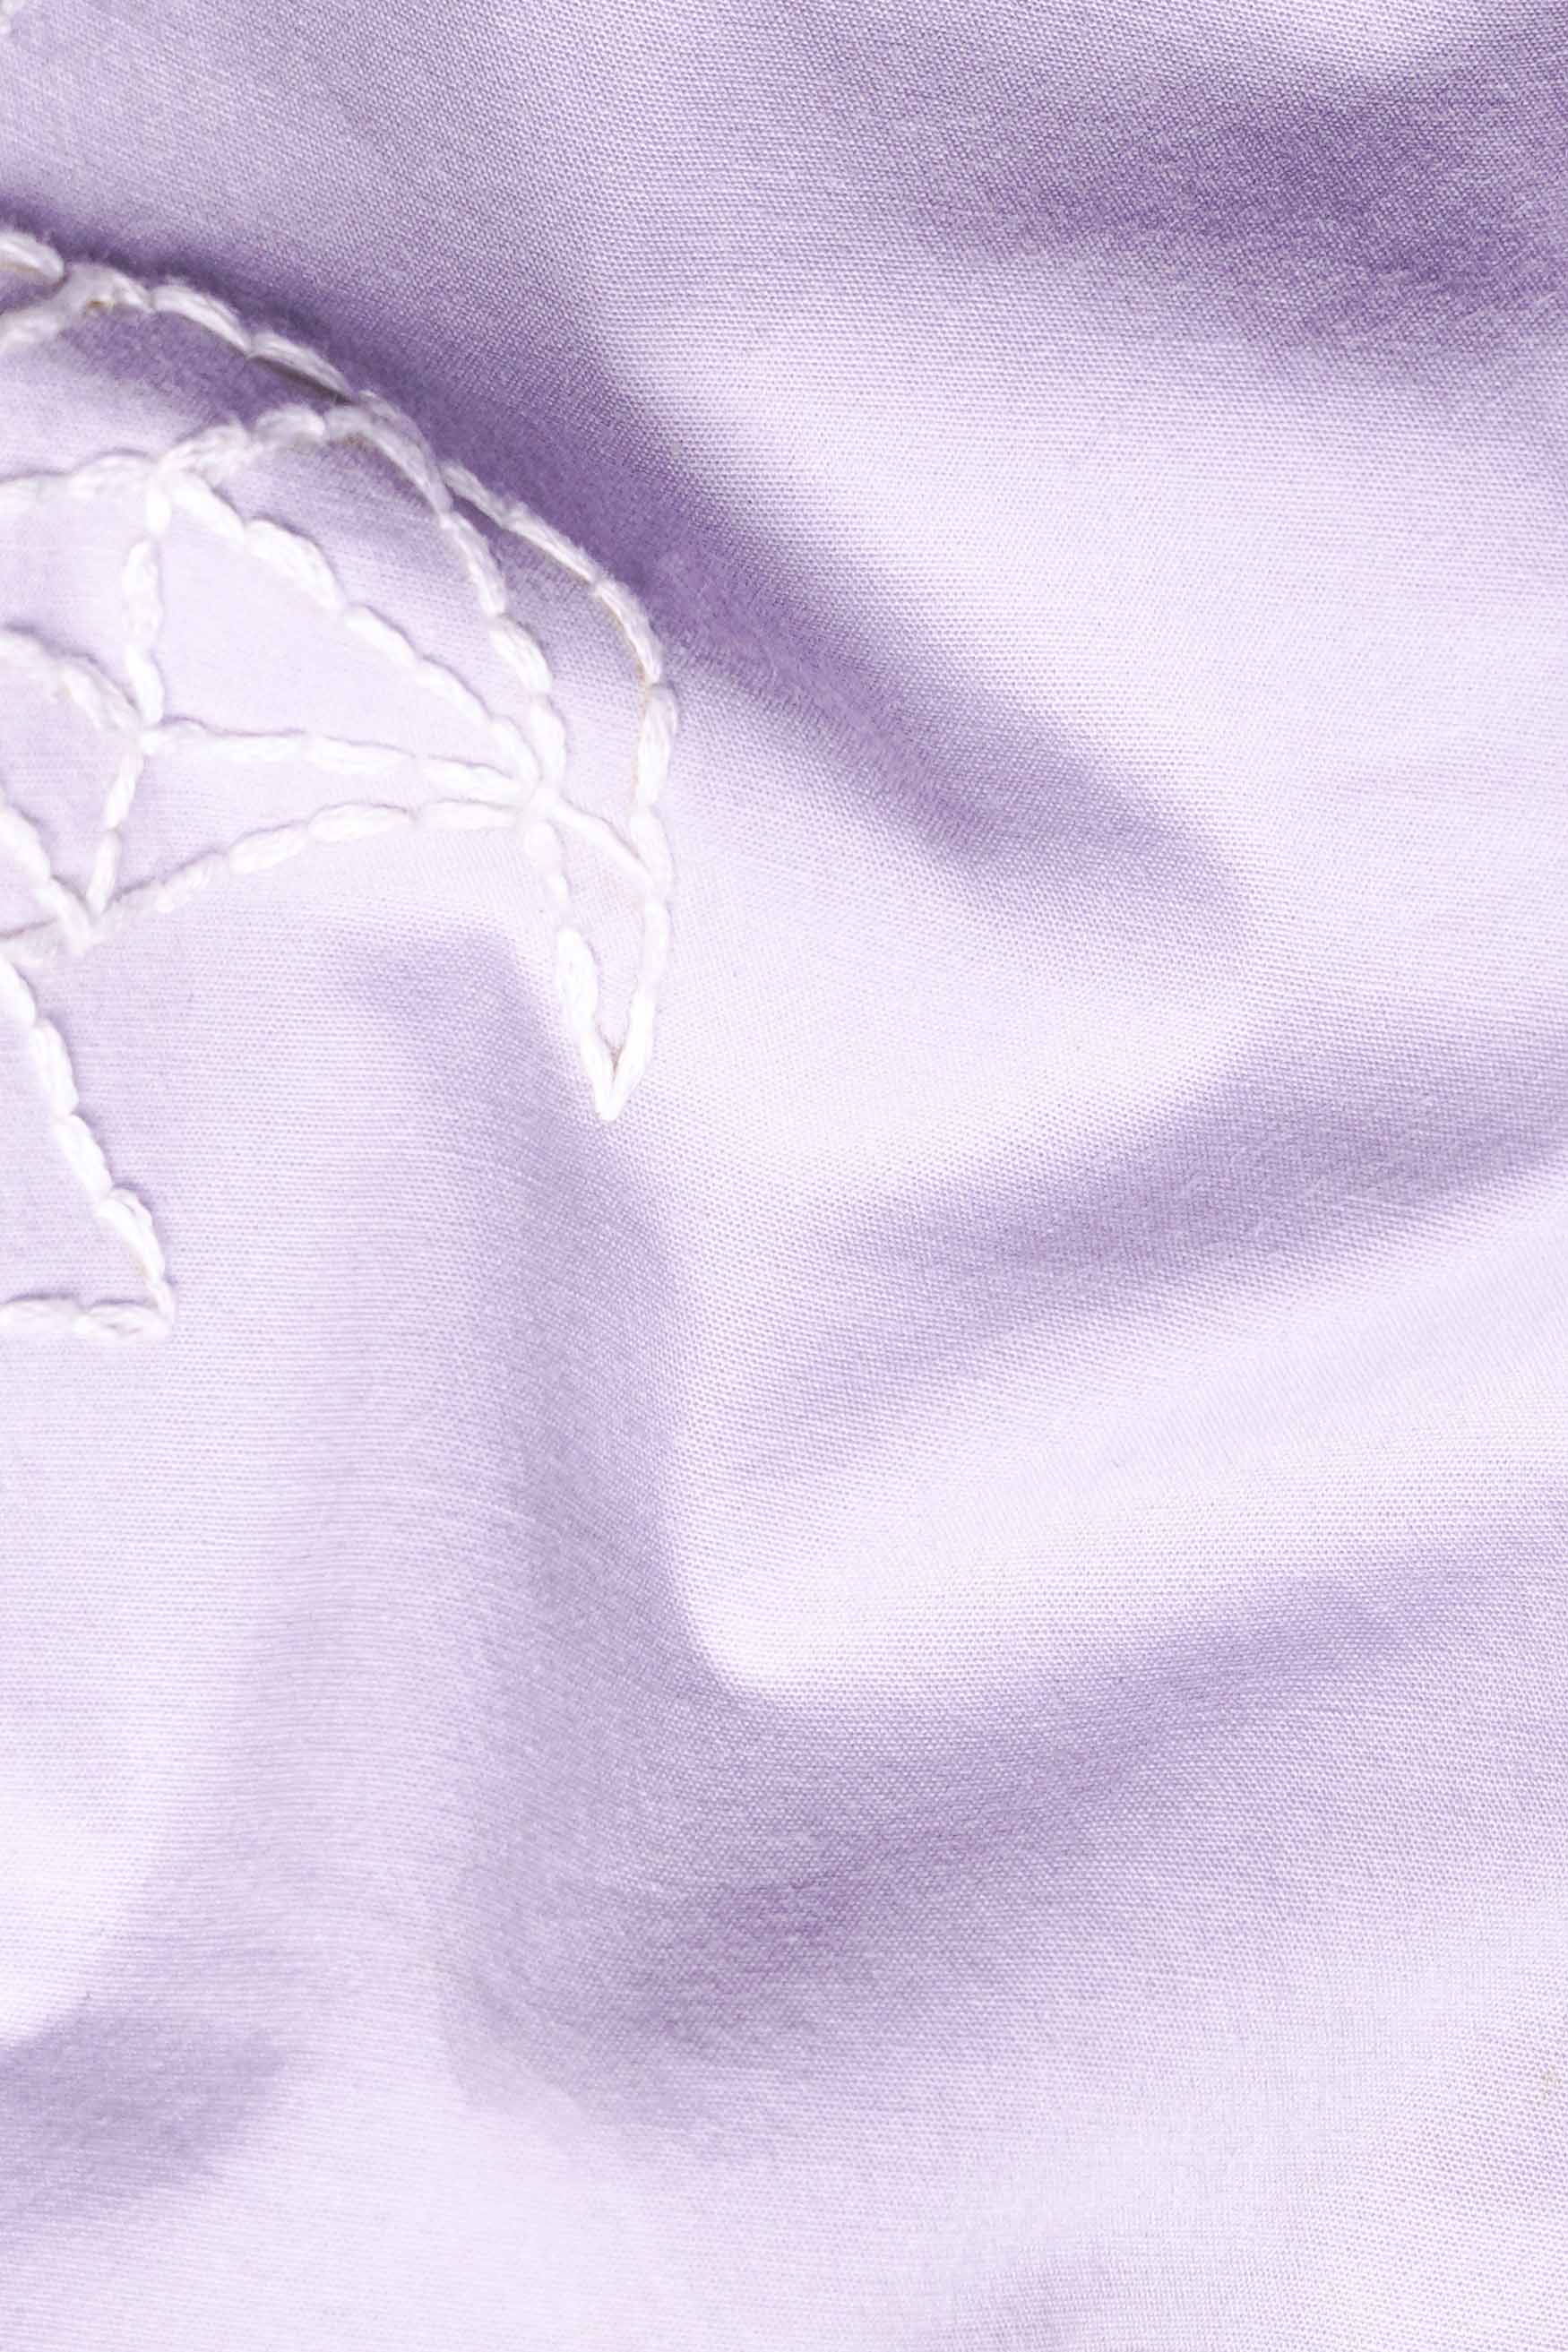 Wisteria Purple Hand stitched Embroidered Royal Oxford Designer Shirt 6290-CLOTH-P-EA170-38, 6290-CLOTH-P-EA170-H-38, 6290-CLOTH-P-EA170-39, 6290-CLOTH-P-EA170-H-39, 6290-CLOTH-P-EA170-40, 6290-CLOTH-P-EA170-H-40, 6290-CLOTH-P-EA170-42, 6290-CLOTH-P-EA170-H-42, 6290-CLOTH-P-EA170-44, 6290-CLOTH-P-EA170-H-44, 6290-CLOTH-P-EA170-46, 6290-CLOTH-P-EA170-H-46, 6290-CLOTH-P-EA170-48, 6290-CLOTH-P-EA170-H-48, 6290-CLOTH-P-EA170-50, 6290-CLOTH-P-EA170-H-50, 6290-CLOTH-P-EA170-52, 6290-CLOTH-P-EA170-H-52